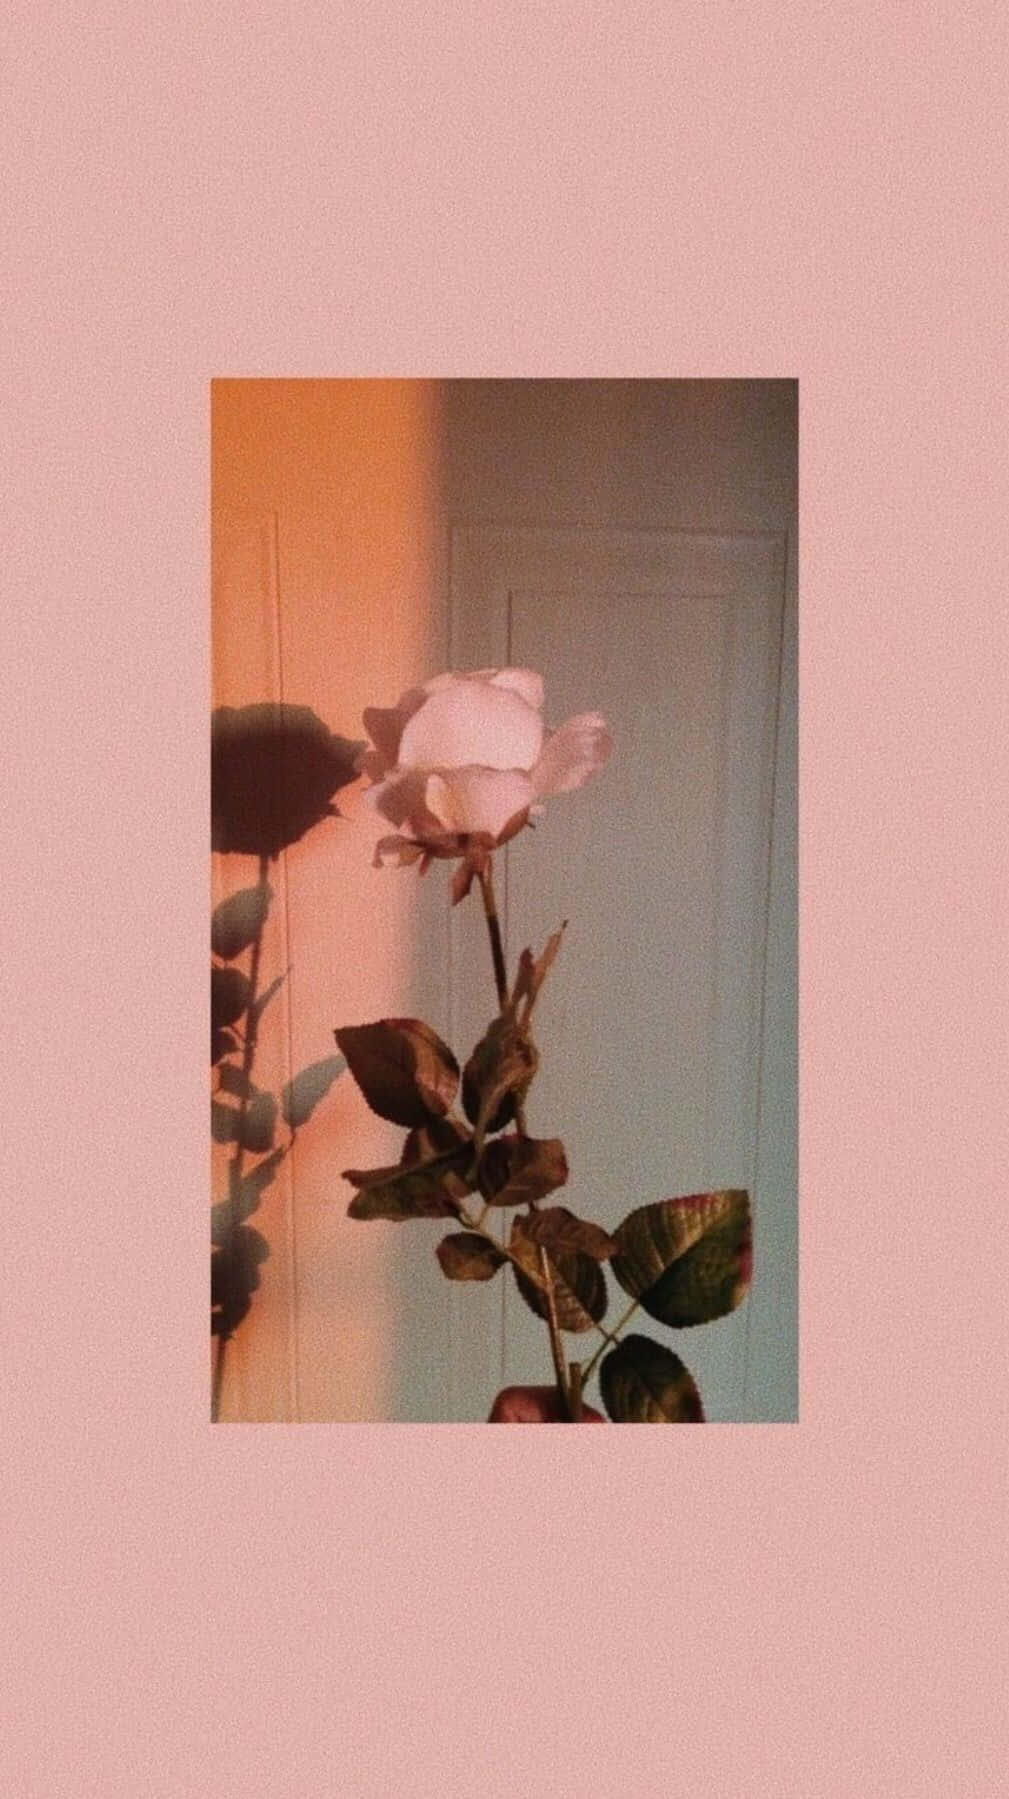 Aesthetic Pink Rose in Full Bloom